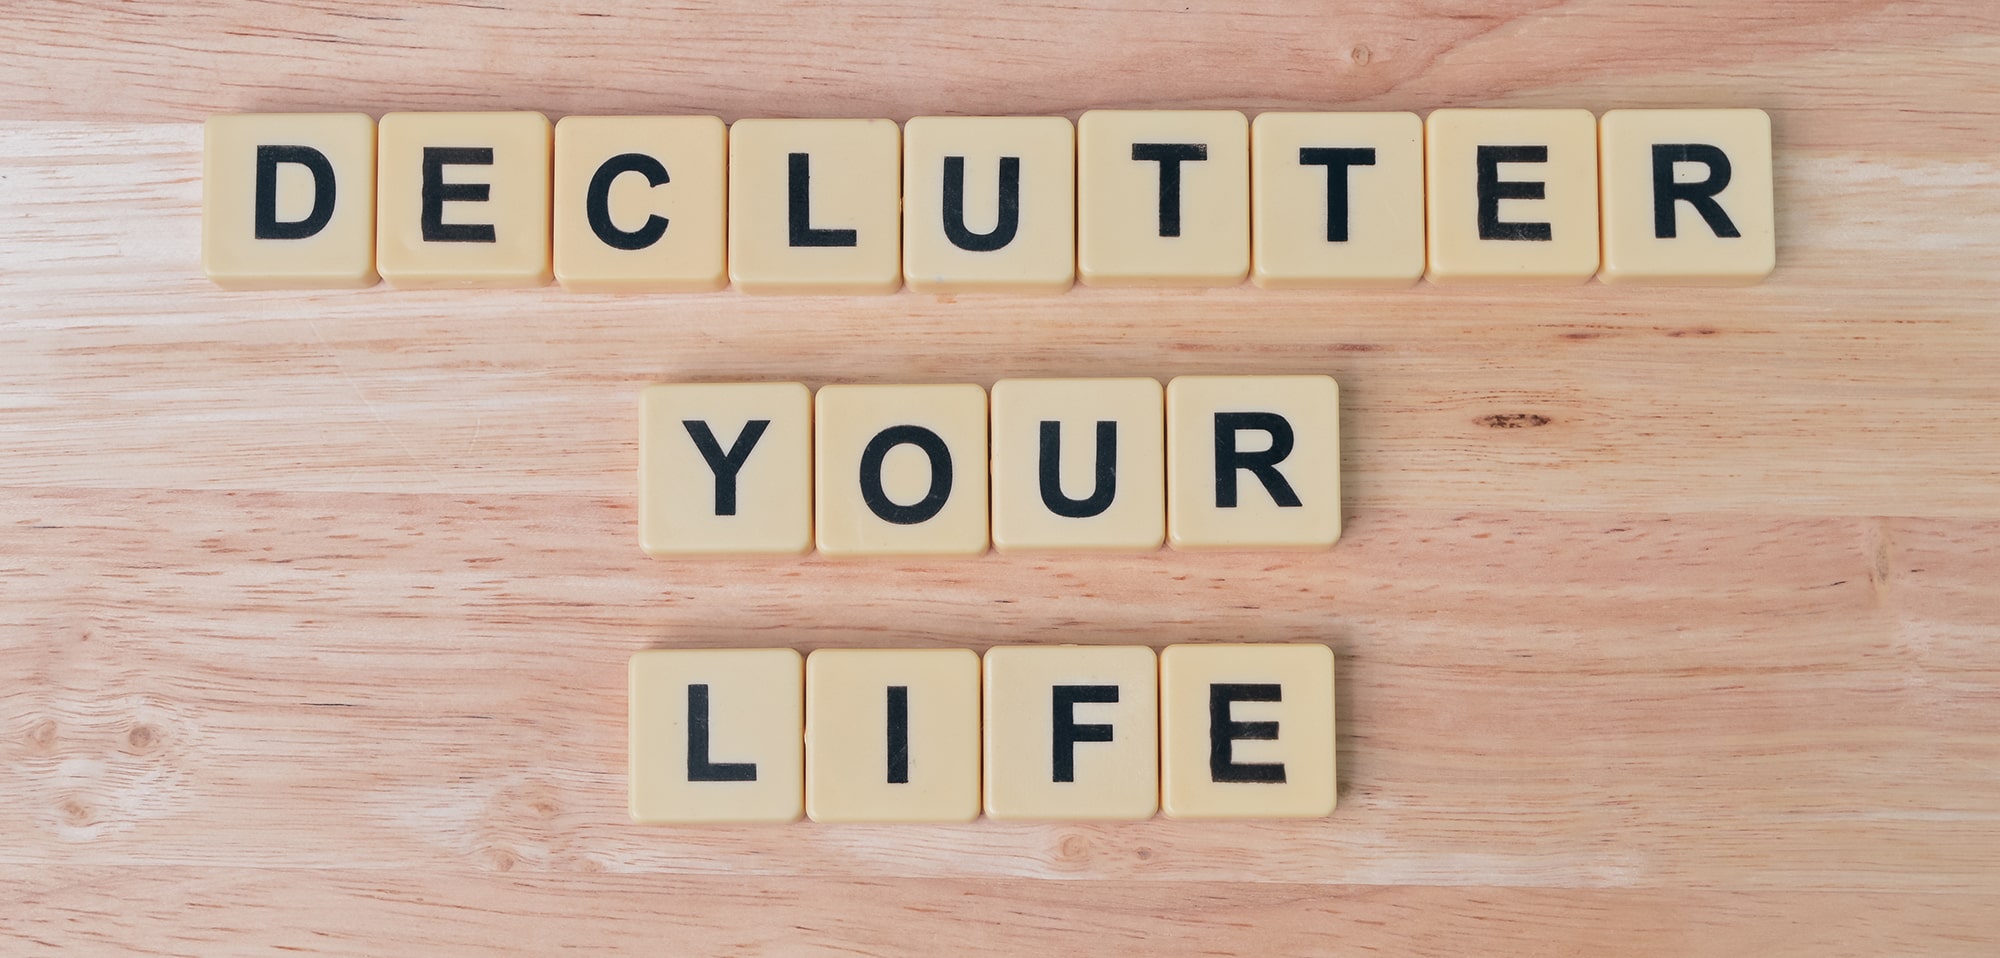 "Declutter your life" spelt with wooden blocks